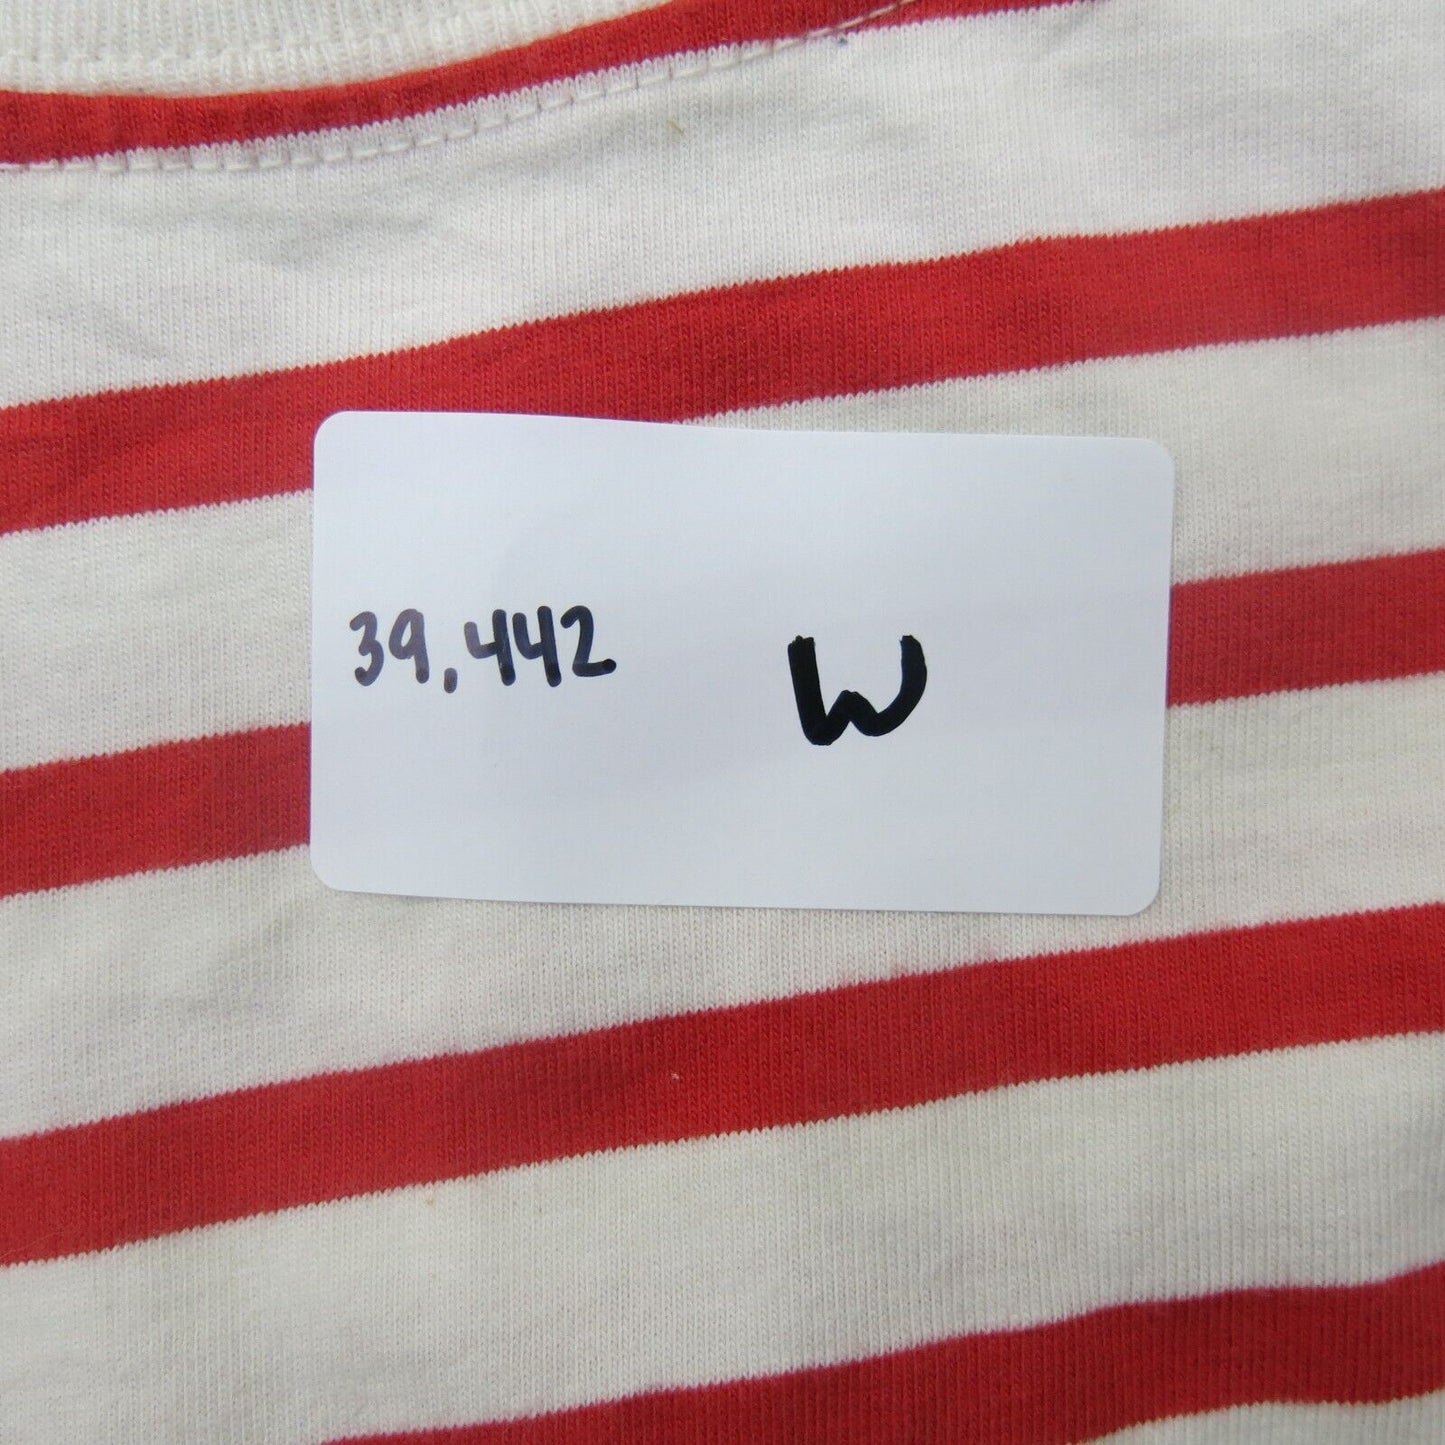 Zara Womens Crew Neck T Shirt Top Peplum Him Short Sleeve Striped Red White SZ S